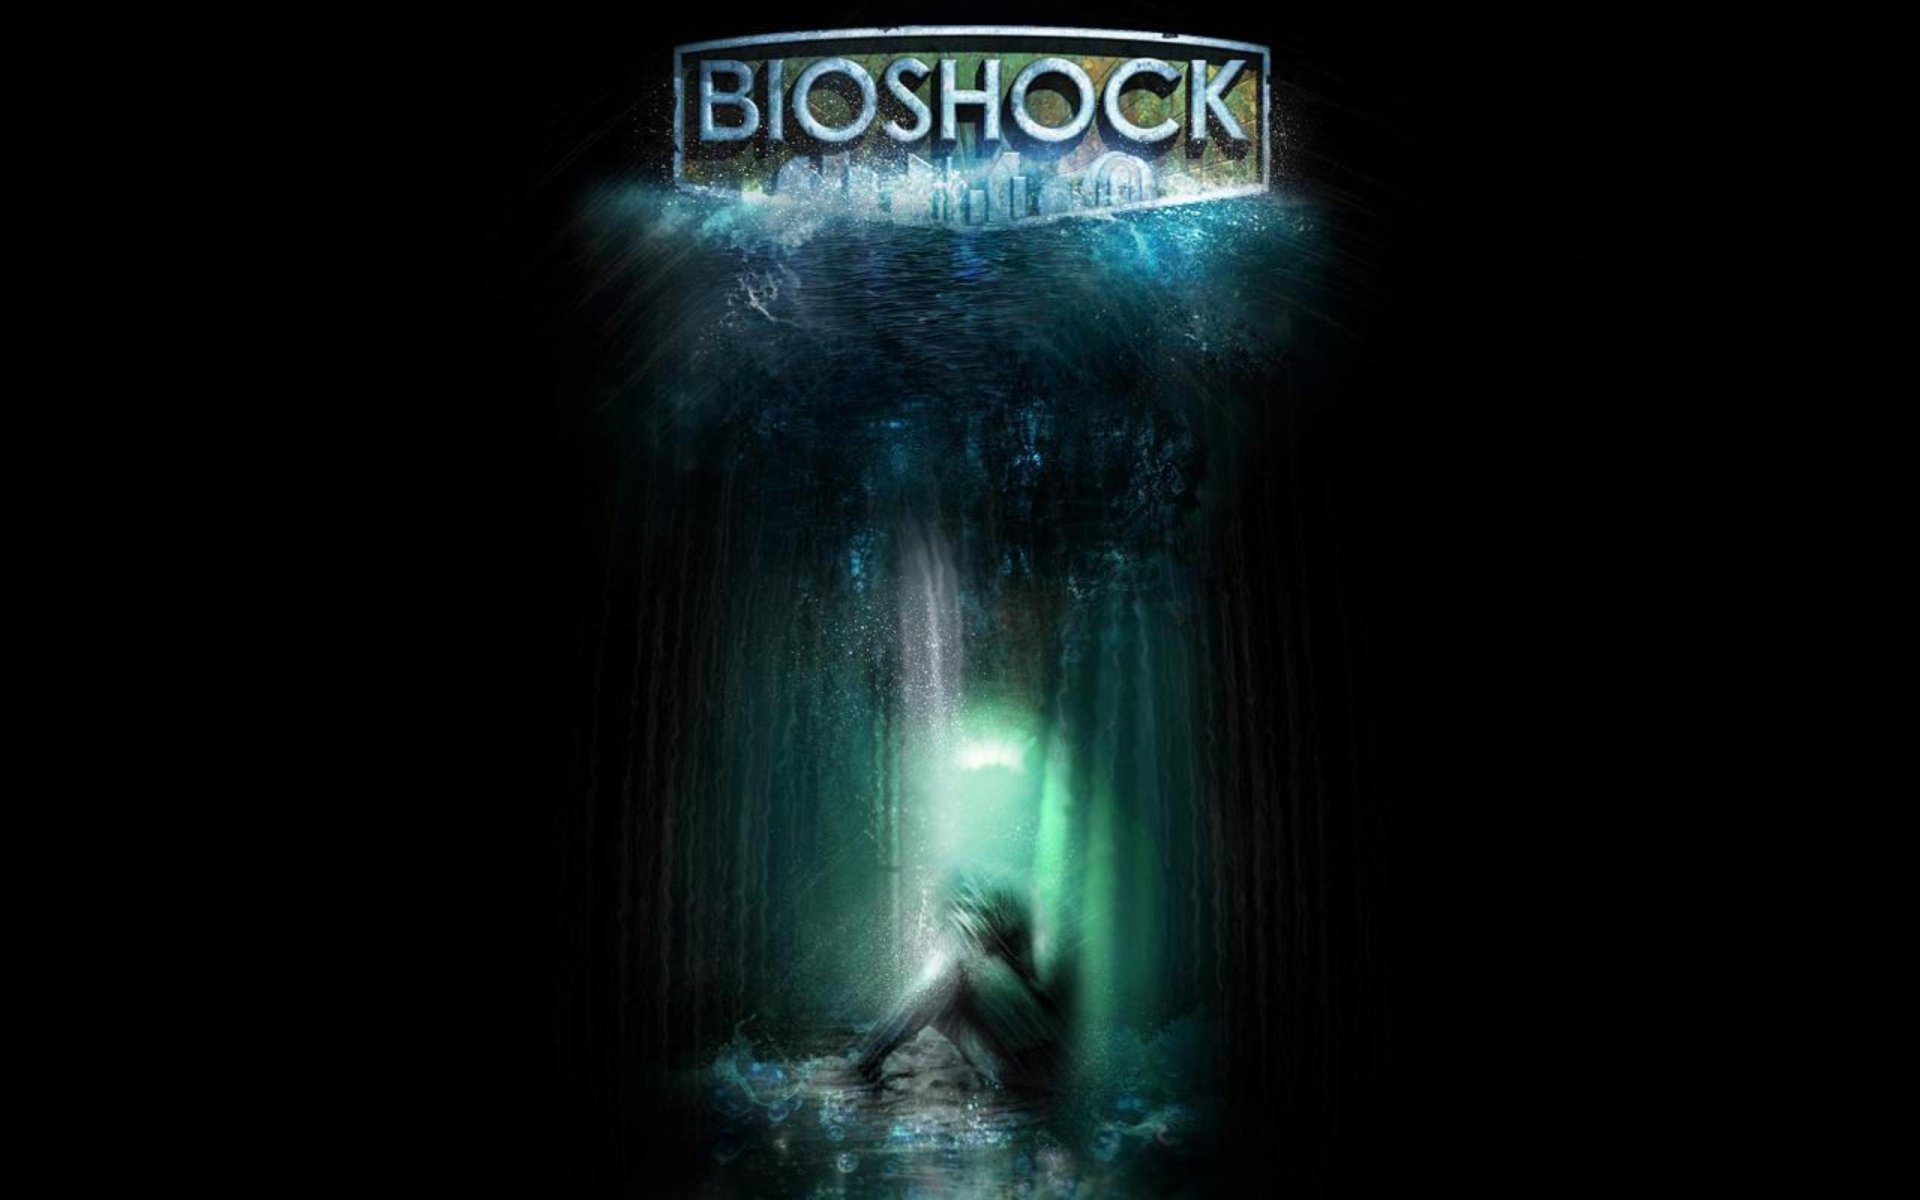 2560x1600 Bioshock Wallpaper Background Image. 